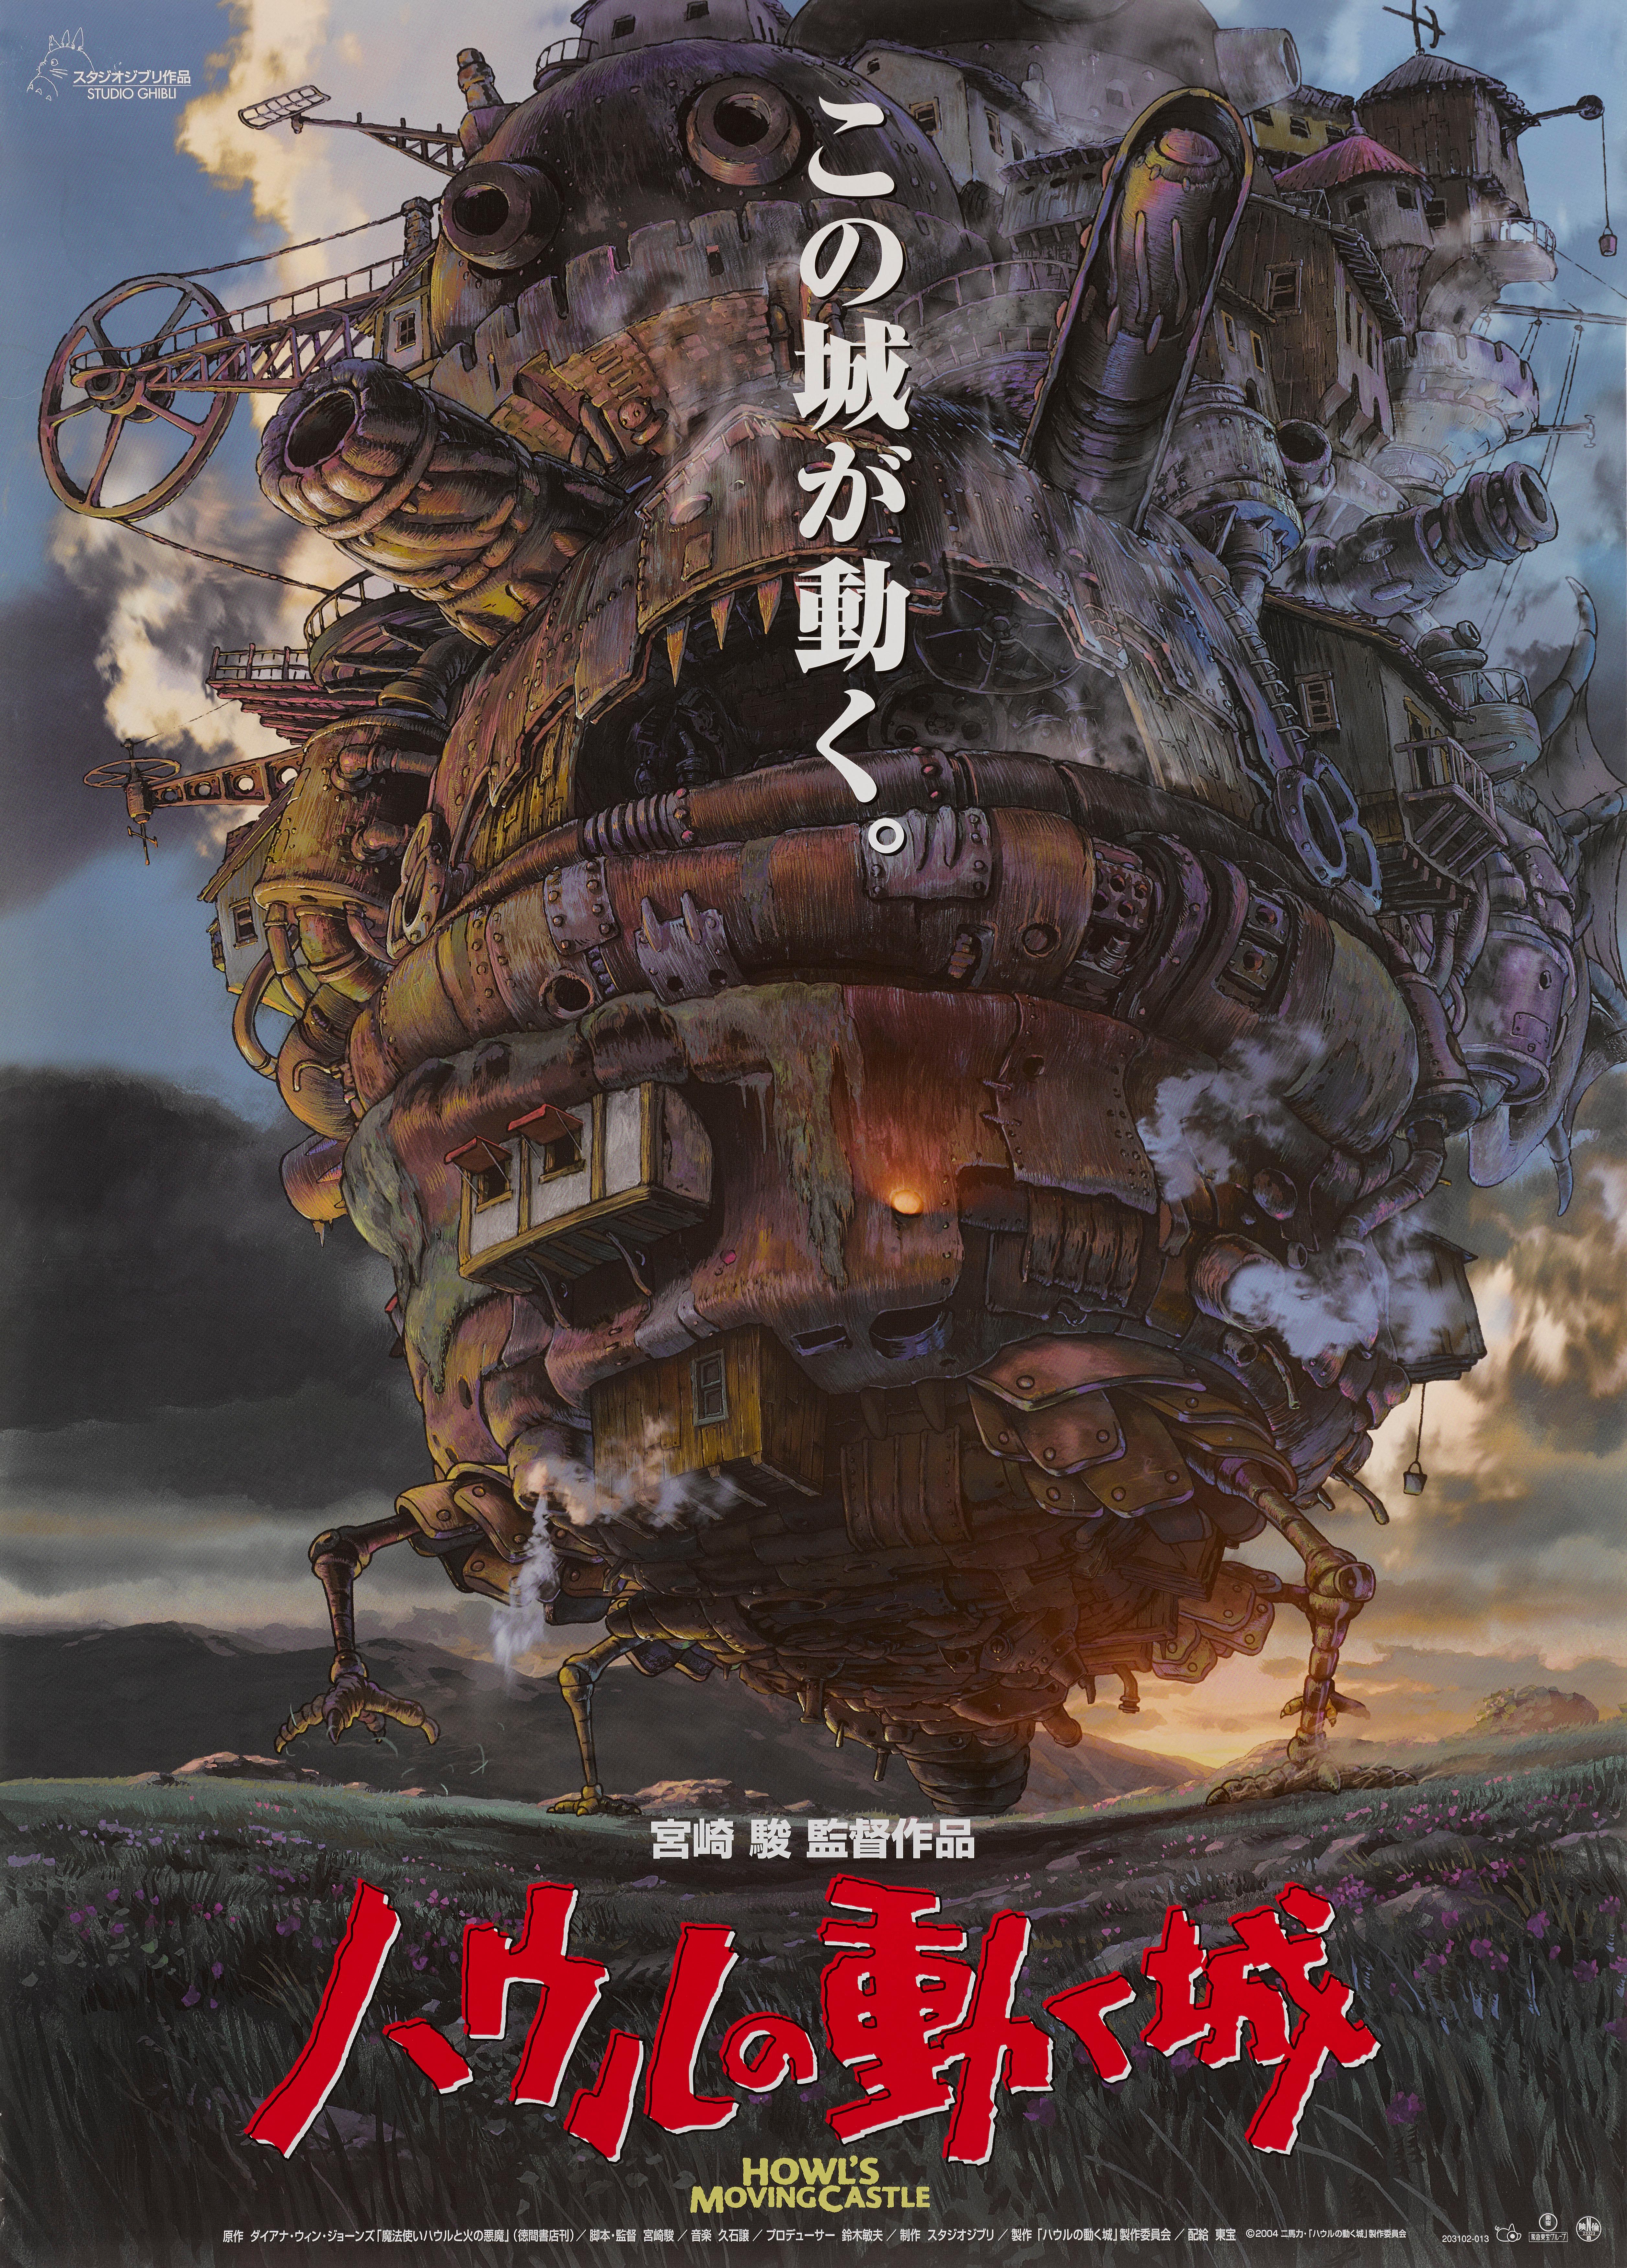 Original Japanese film poster for the 2004 Studio Ghibli Animation Hauru no Ugoku Shiro / Howl's Moving Castle
This film was directed by Hayao Miyazaki.